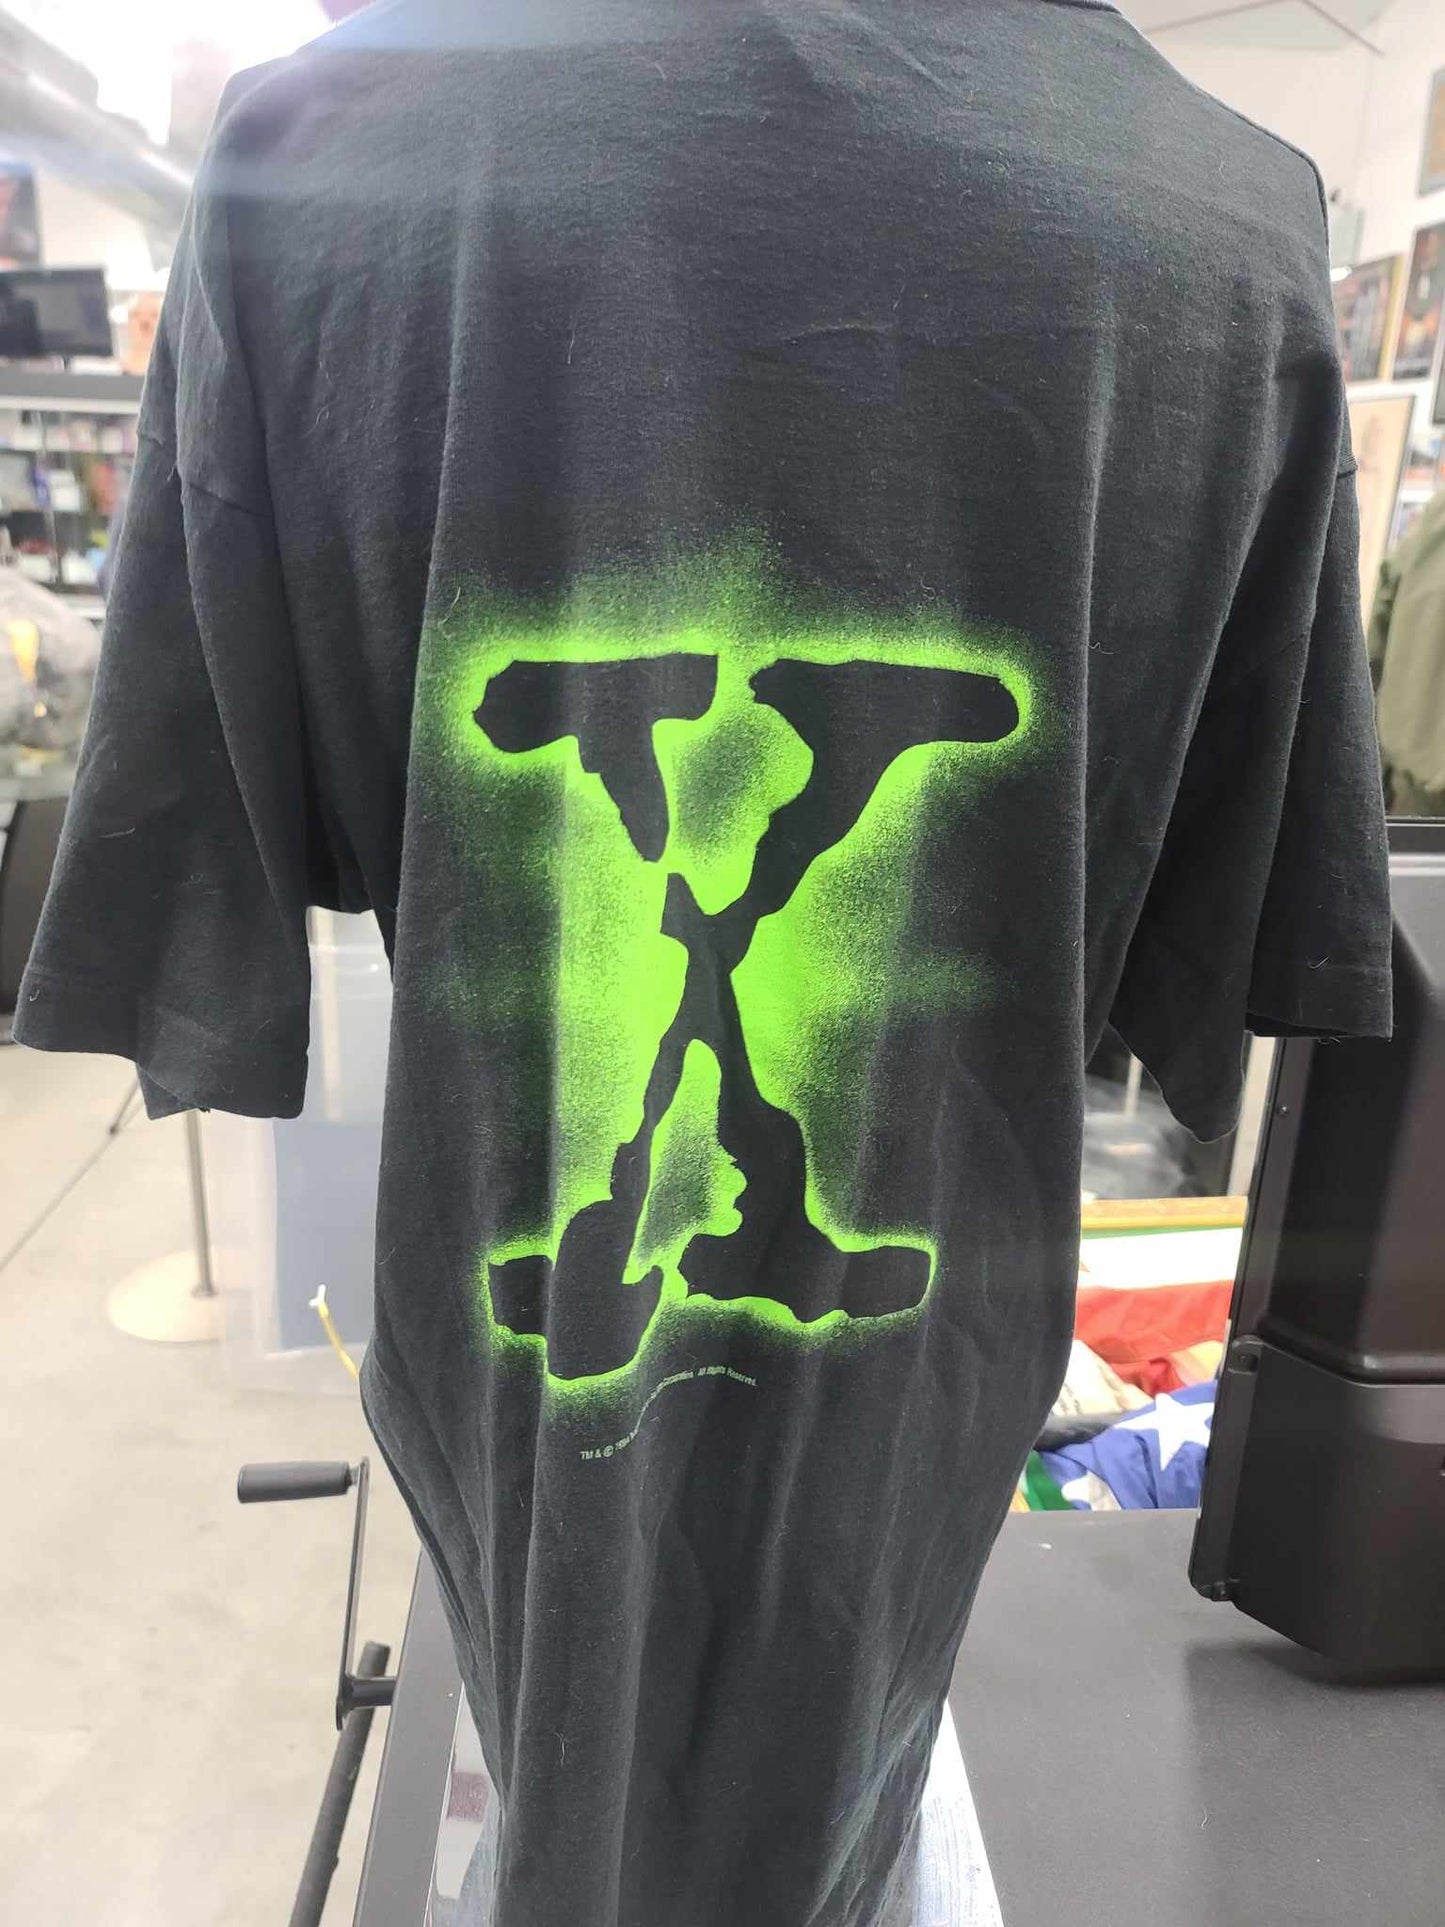 The X-Files Shirt